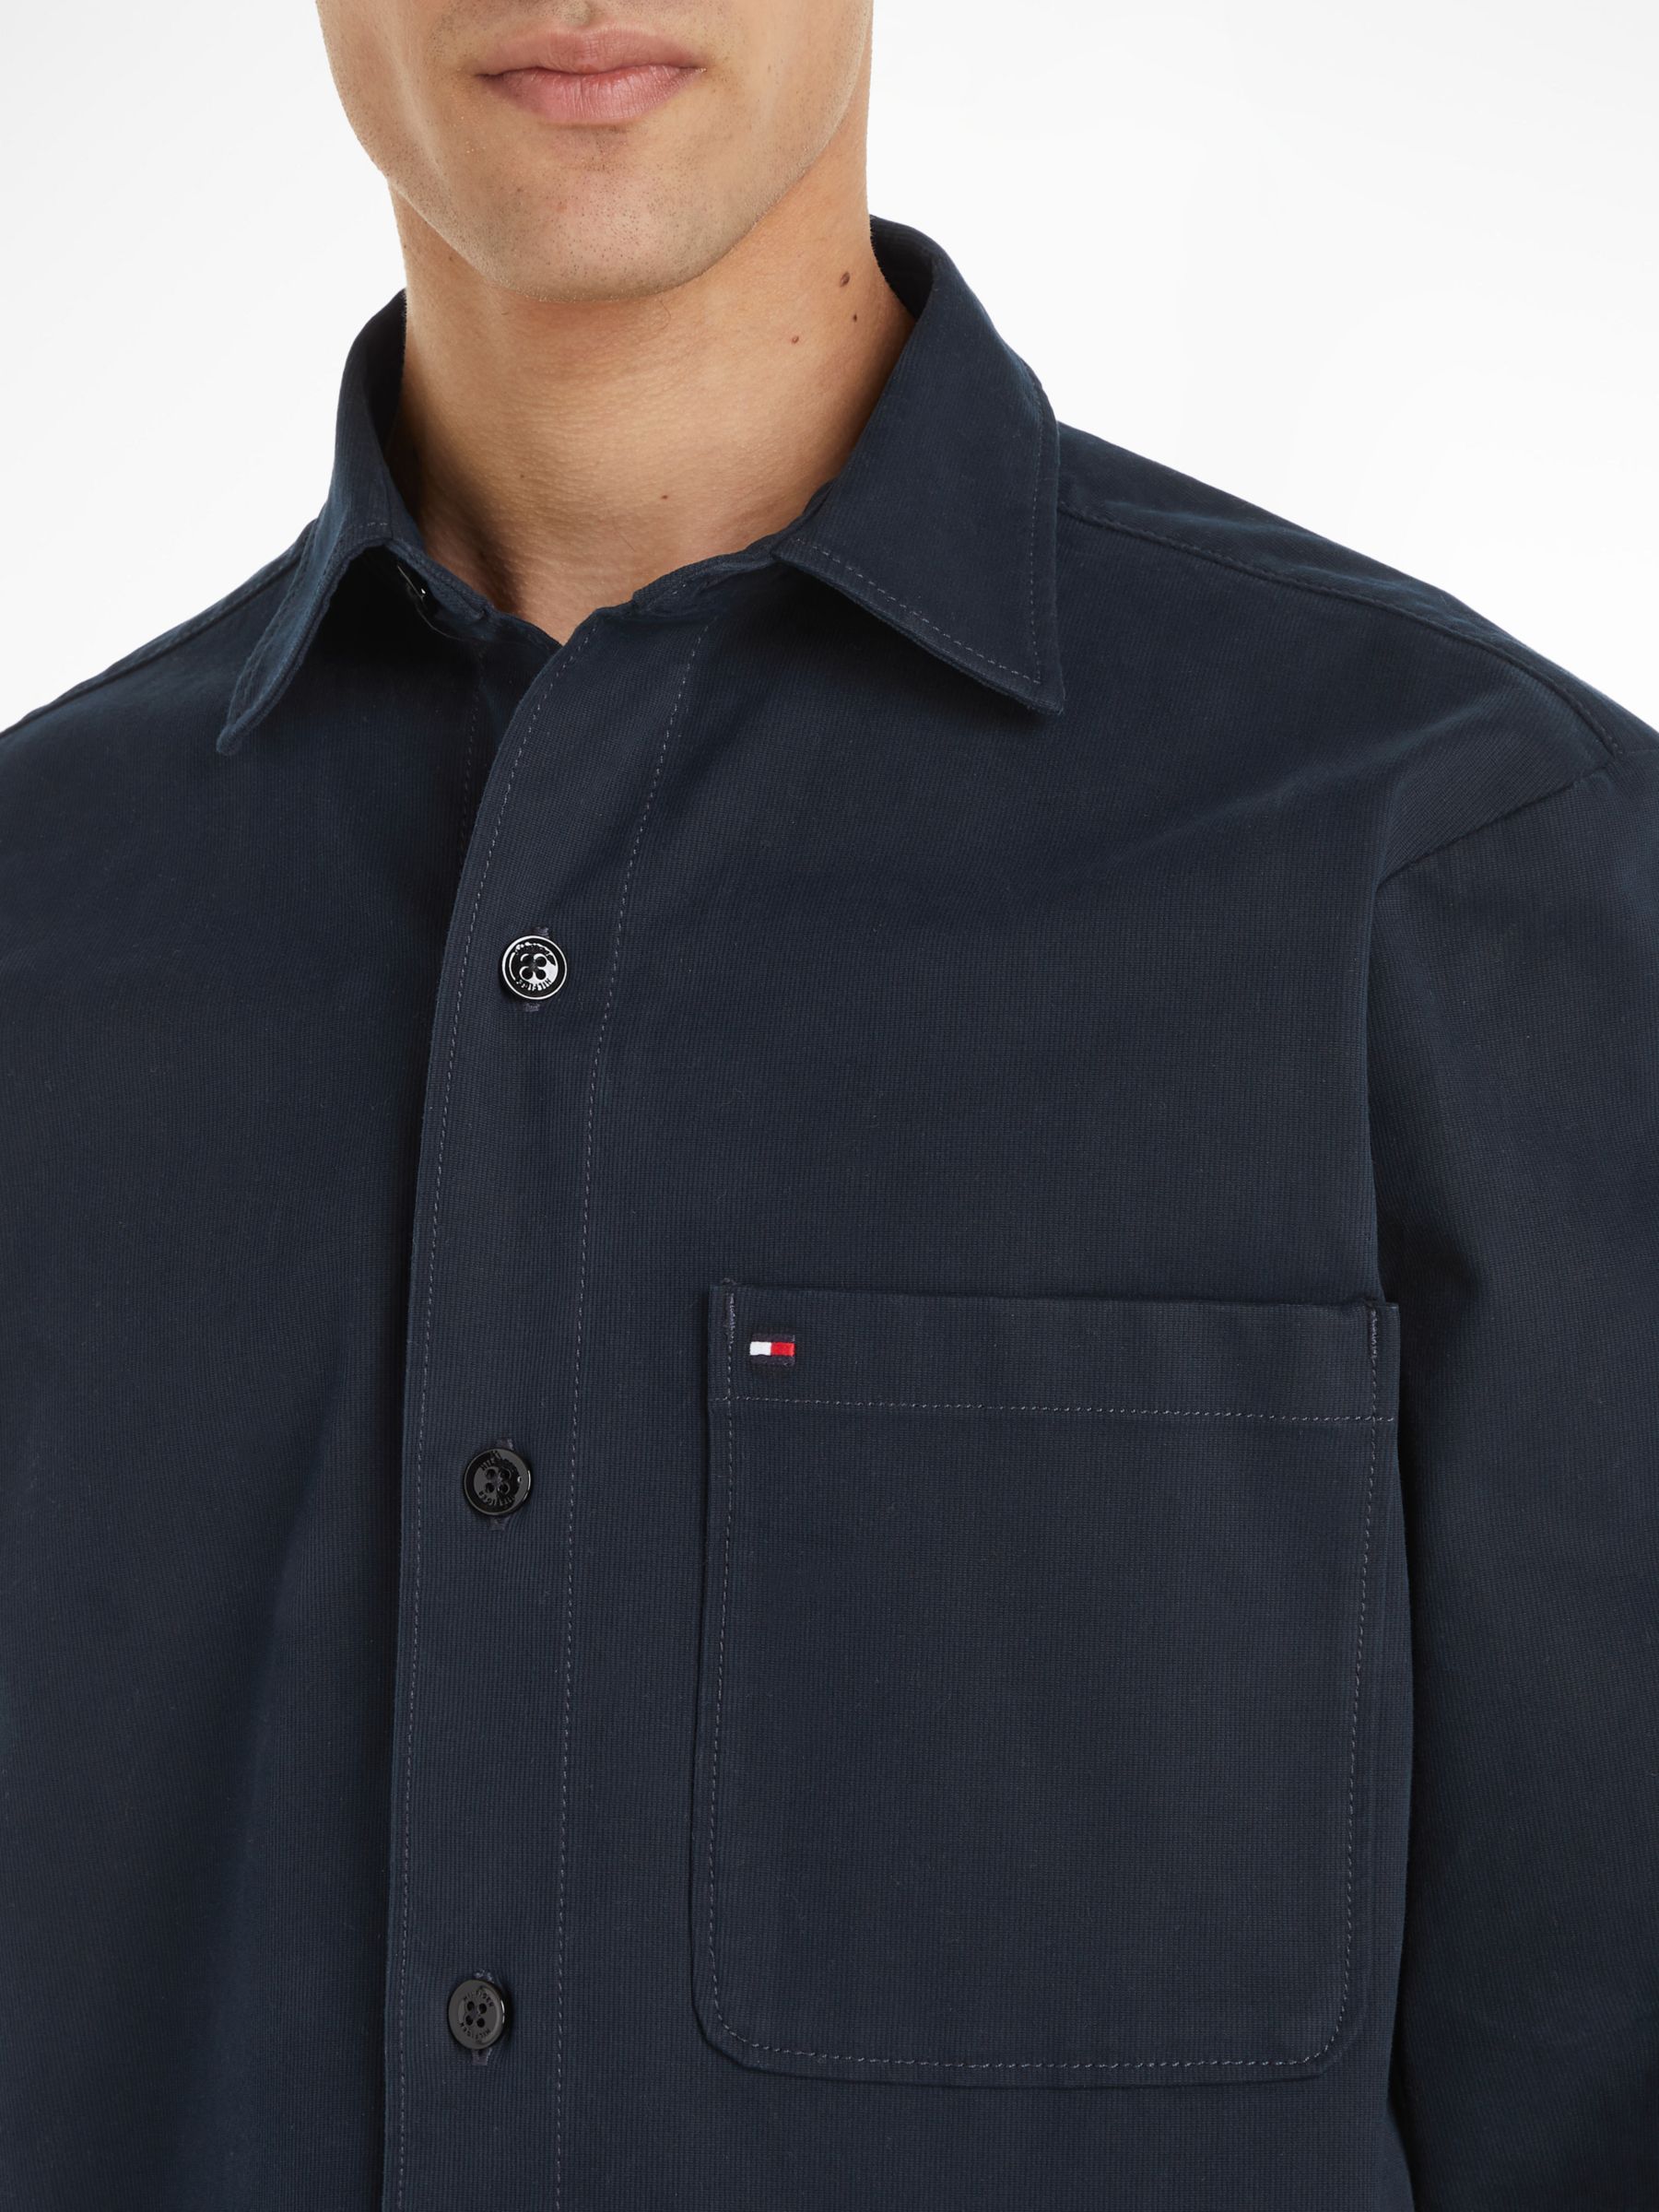 Buy Tommy Hilfiger Solid Bedford Overshirt, Navy Online at johnlewis.com